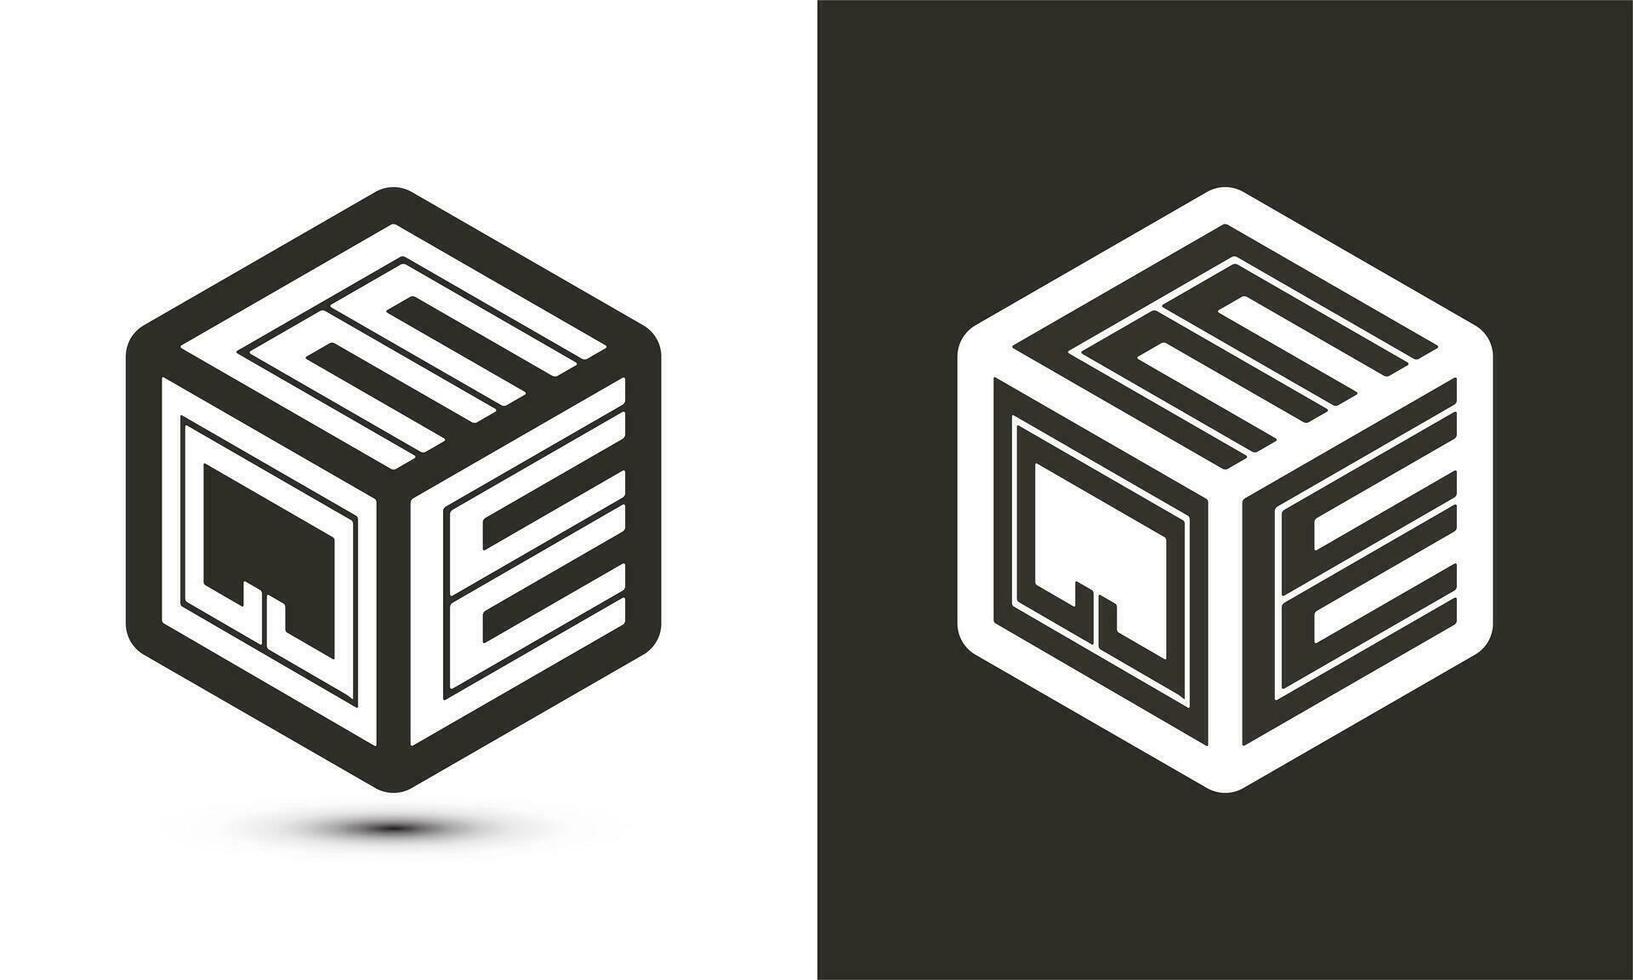 eqe letra logo diseño con ilustrador cubo logo, vector logo moderno alfabeto fuente superposición estilo.